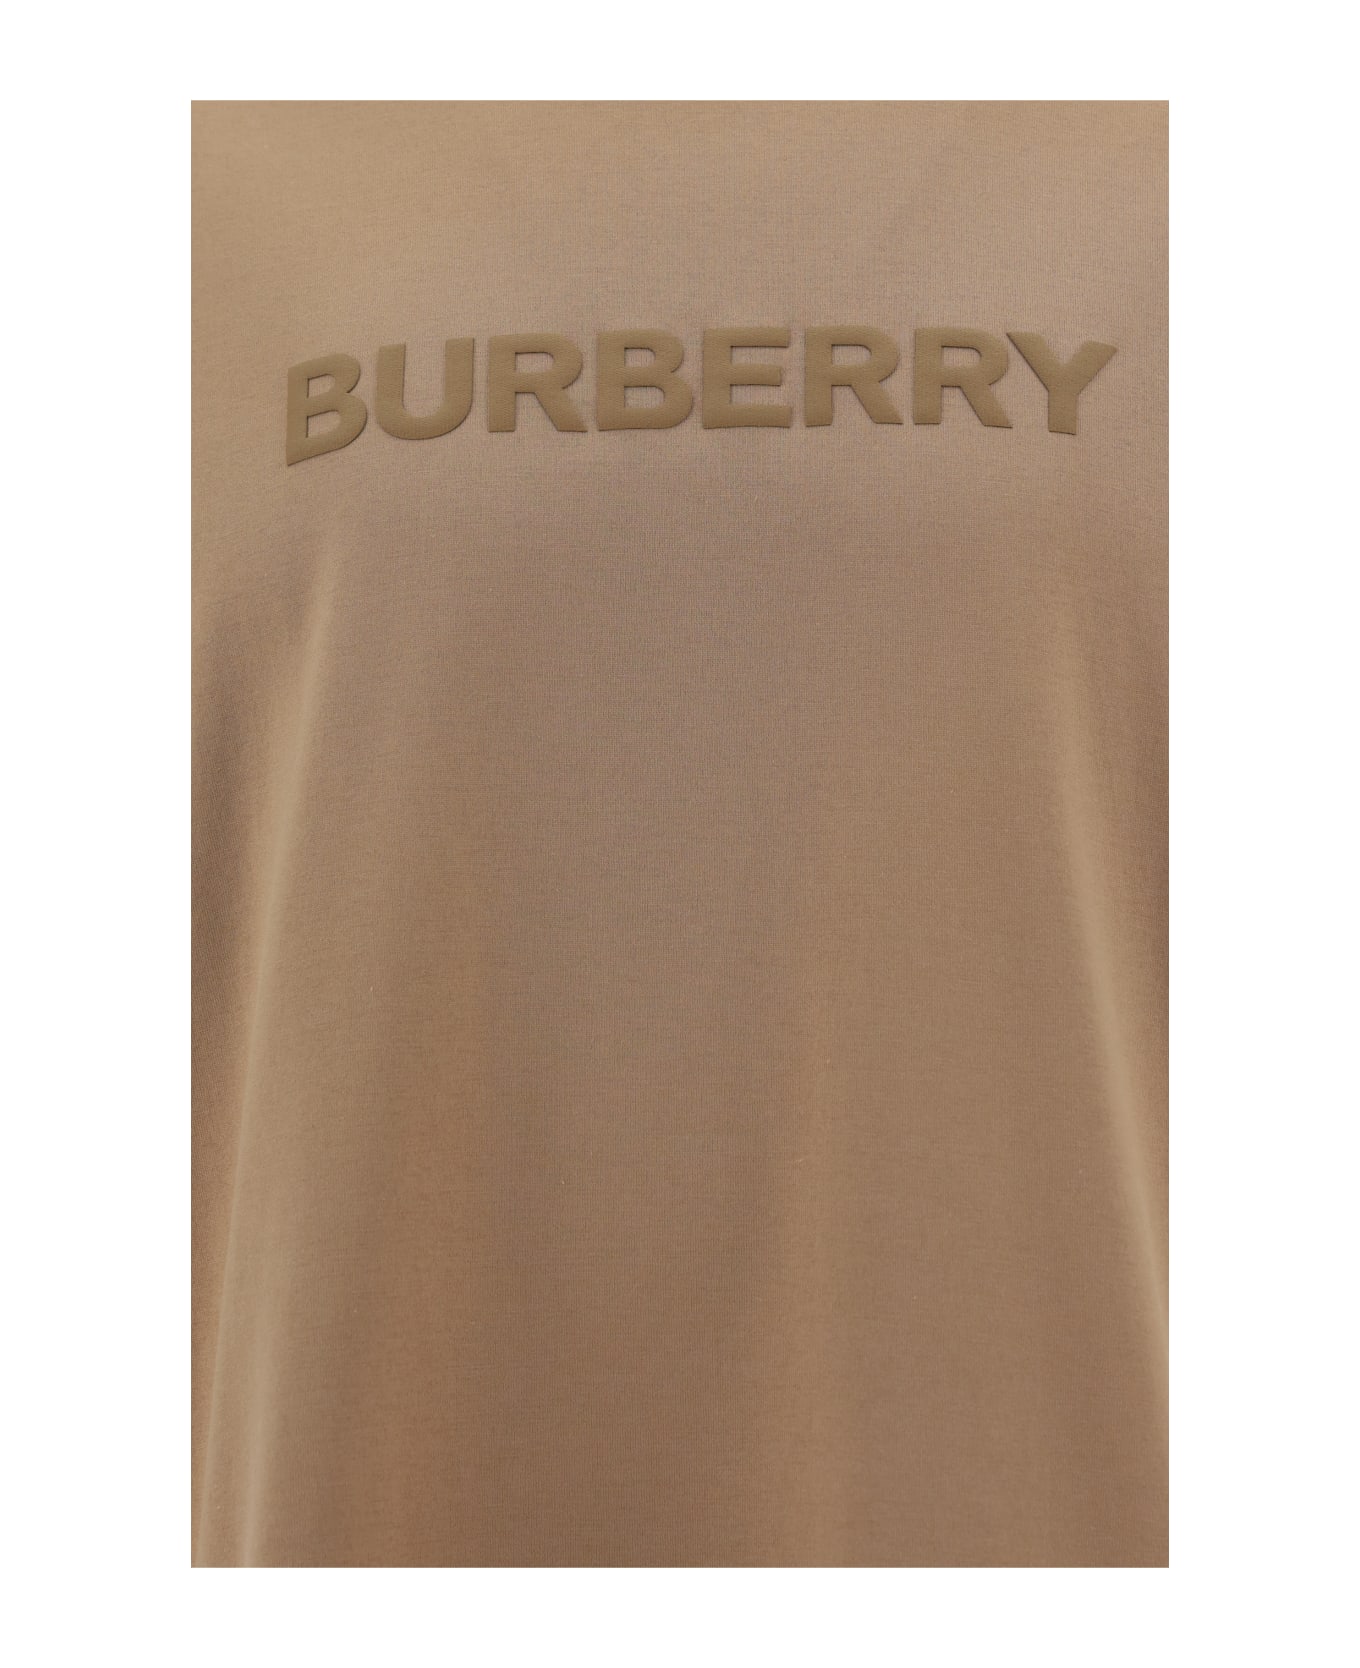 Burberry Harriston T-shirt - Camel